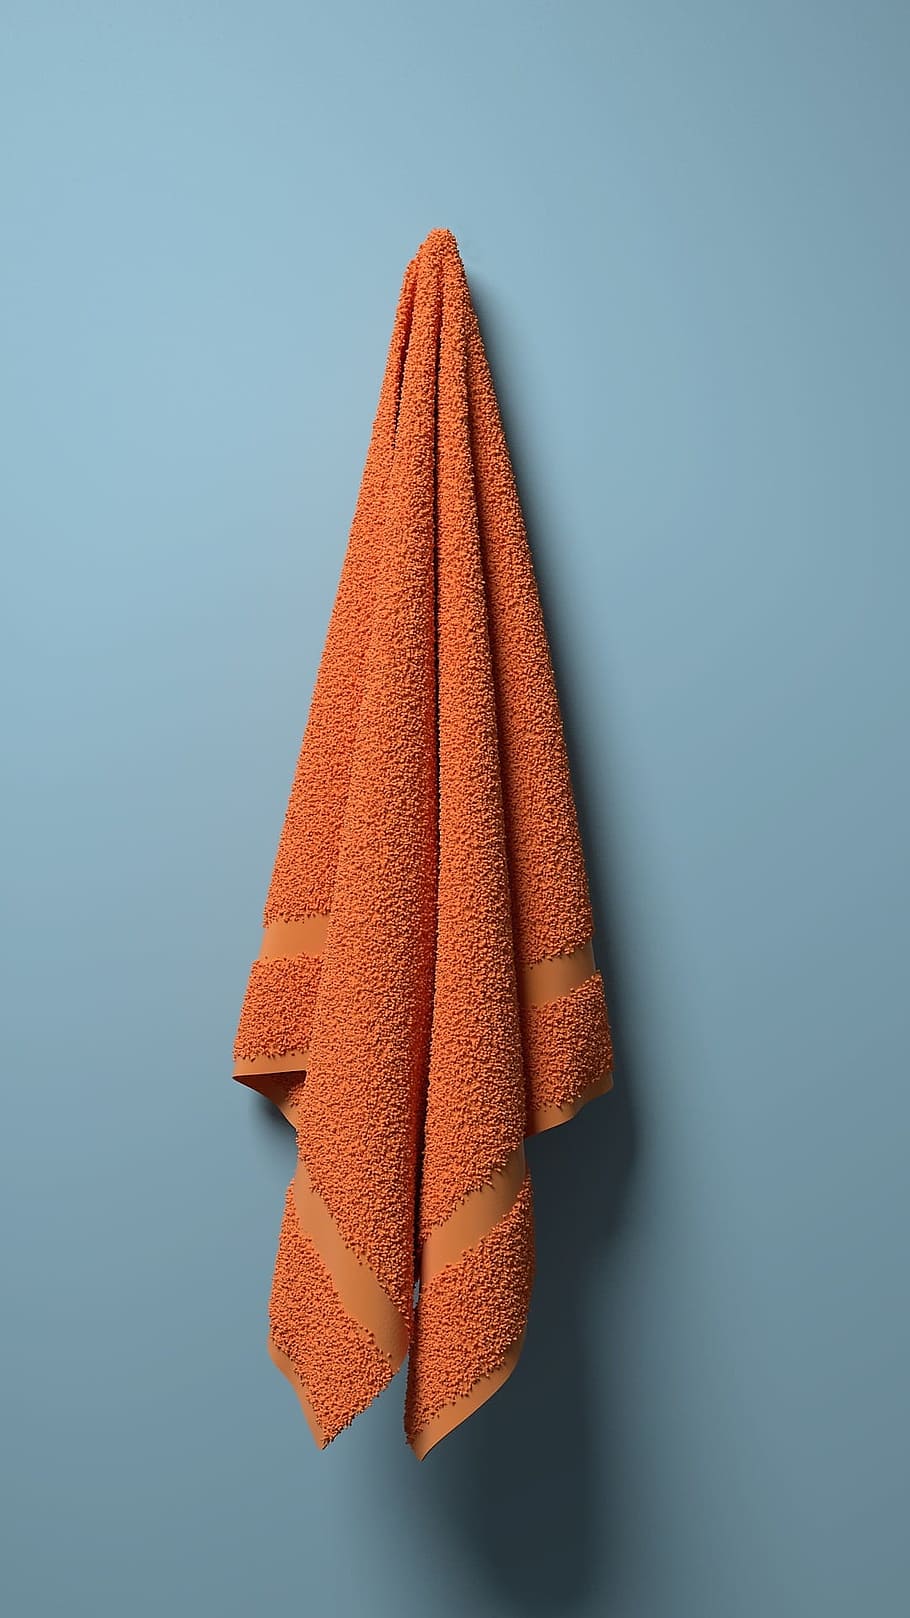 towel, bathroom, clean, new, orange, simple, studio shot, indoors, colored background, still life